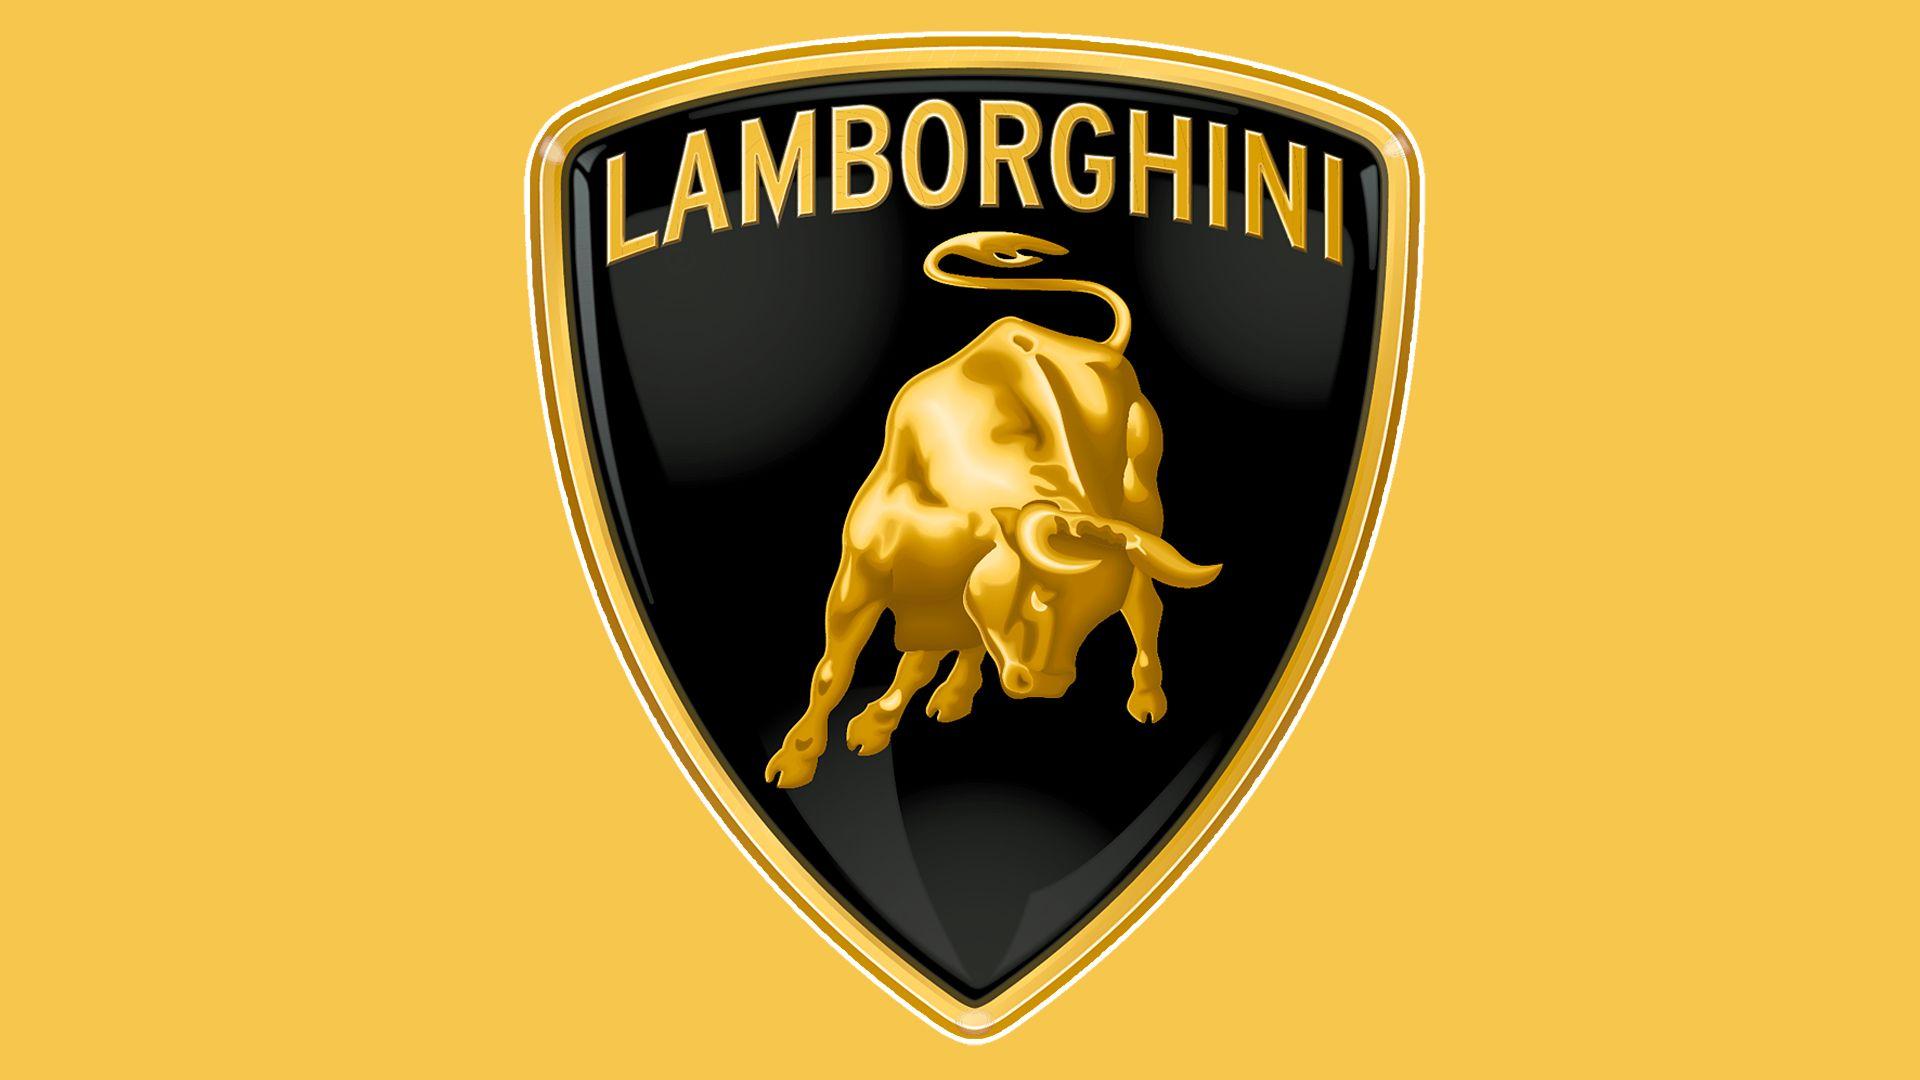 Lanmborghini Logo - Meaning Lamborghini logo and symbol | history and evolution